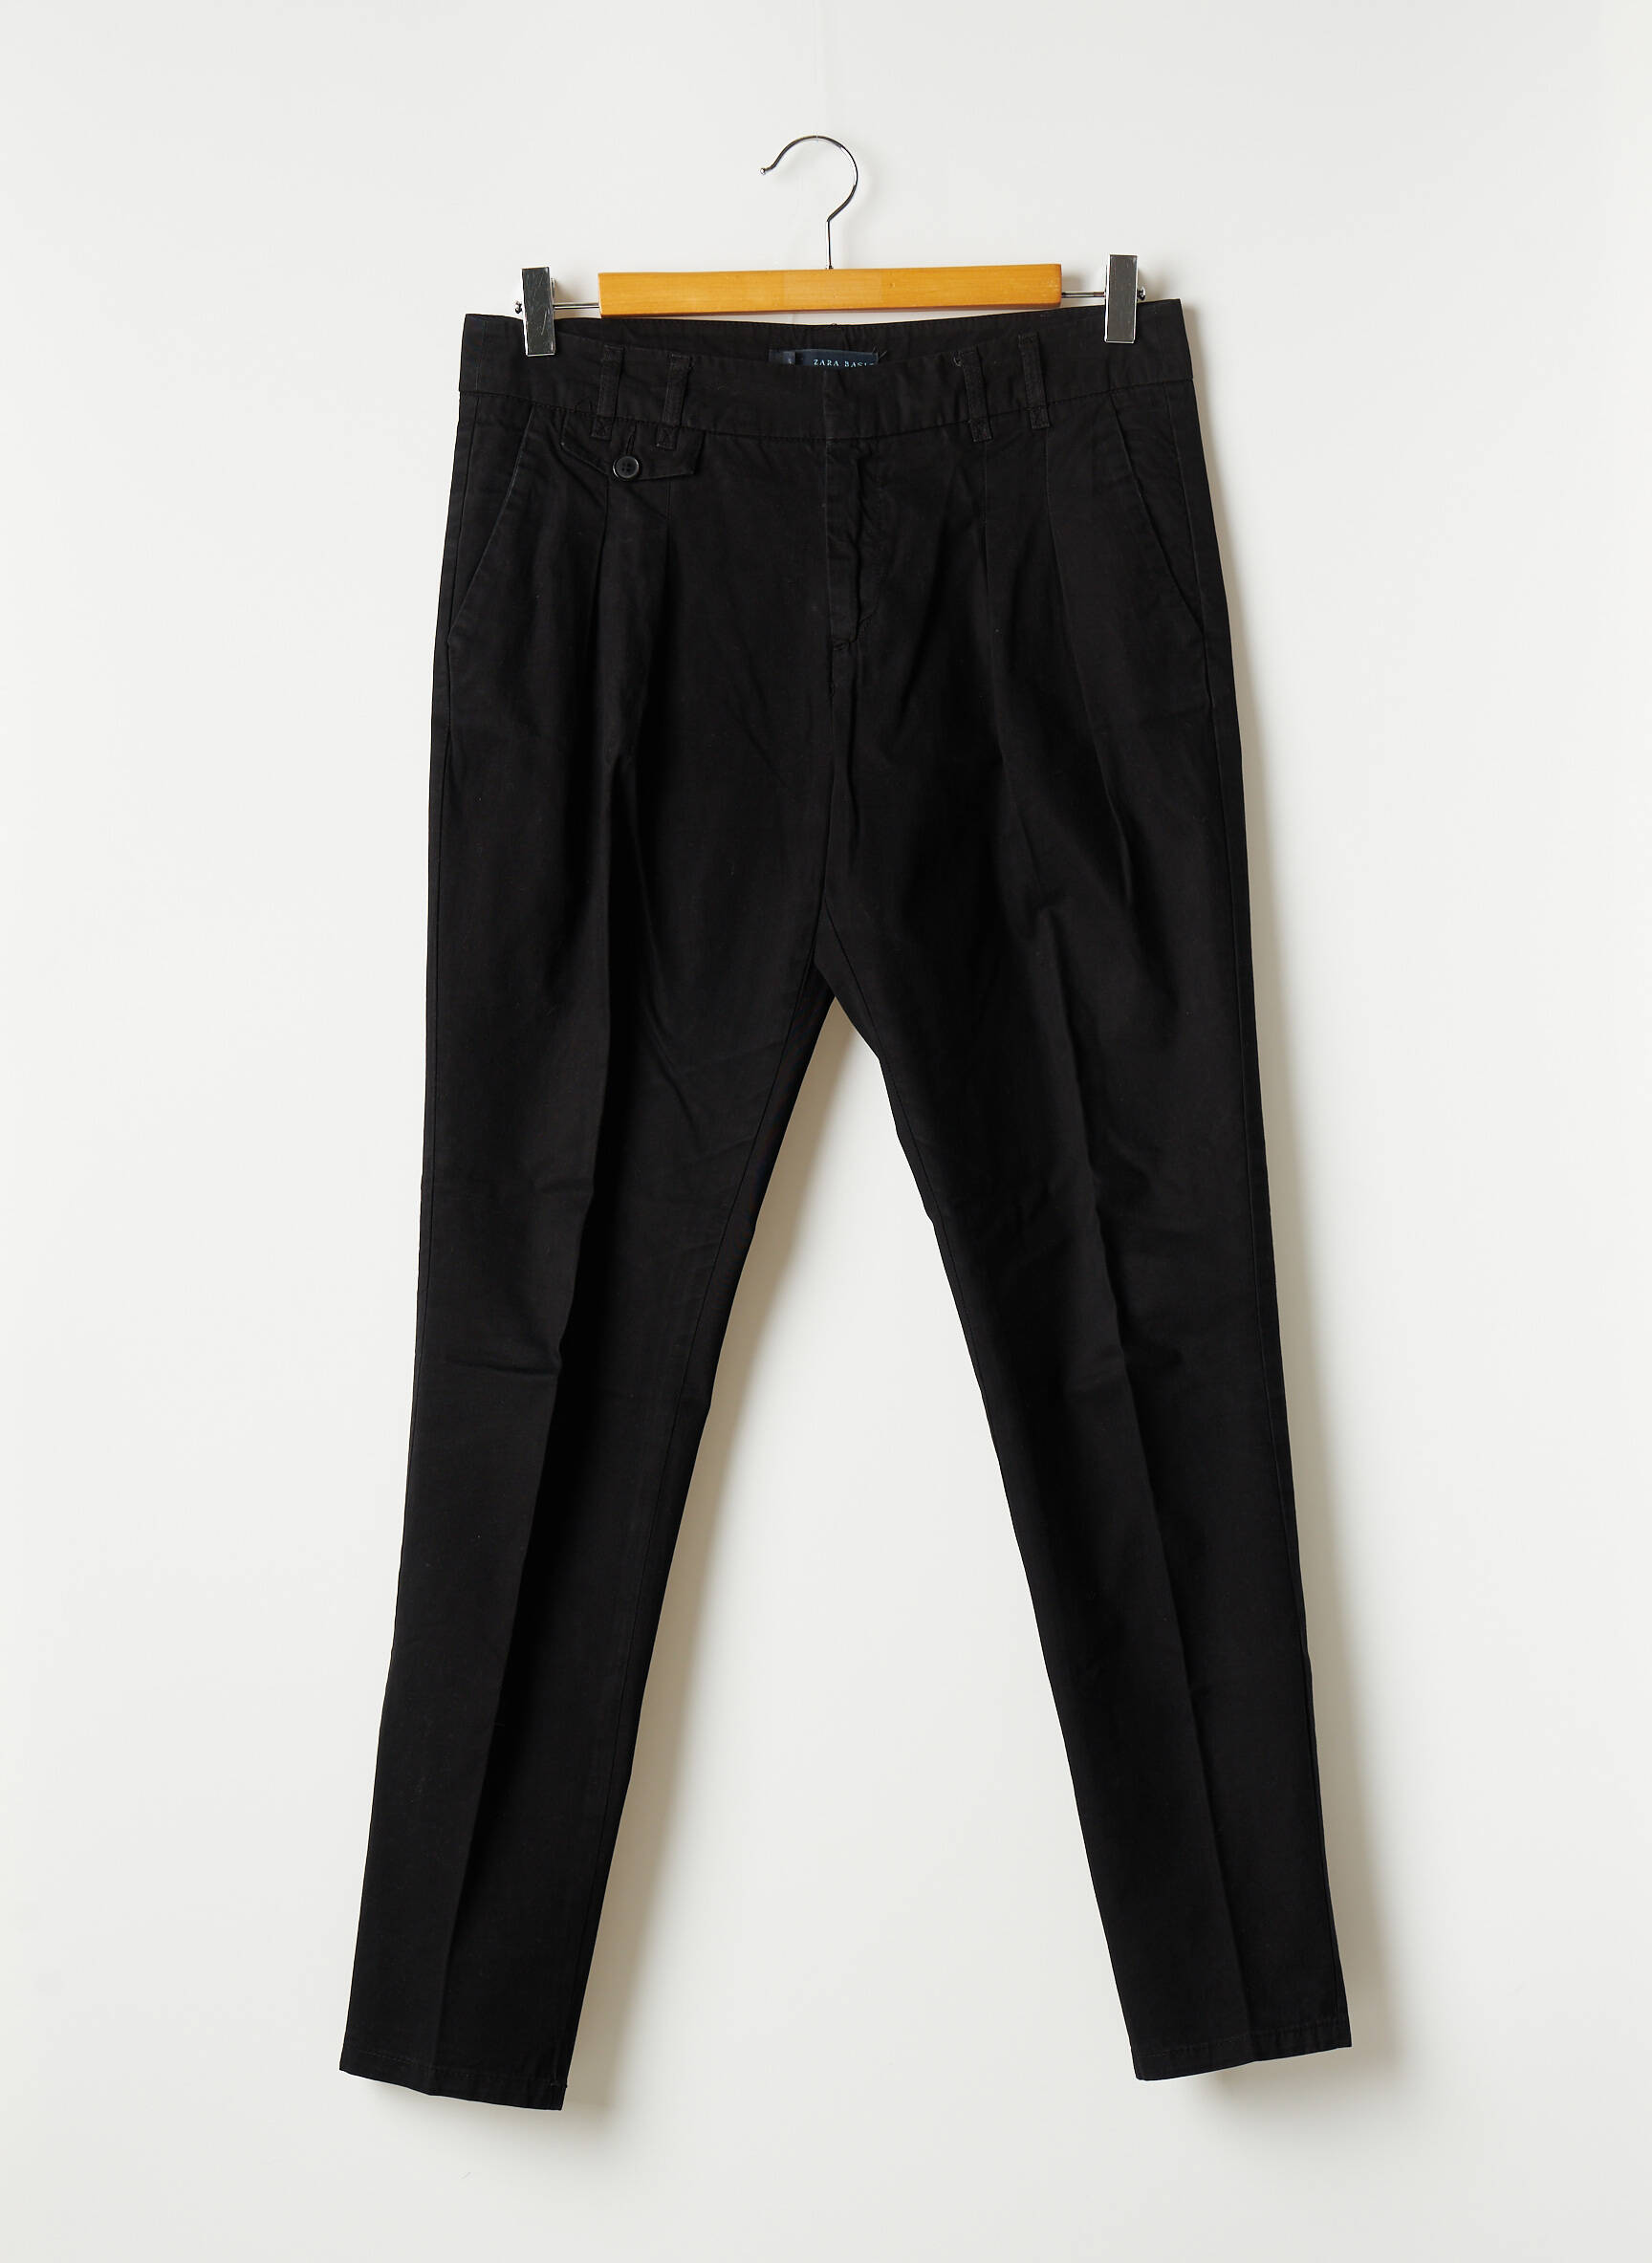 ZARA Pantalon chino de couleur noir en soldes pas cher 1881921-noir00 - Modz